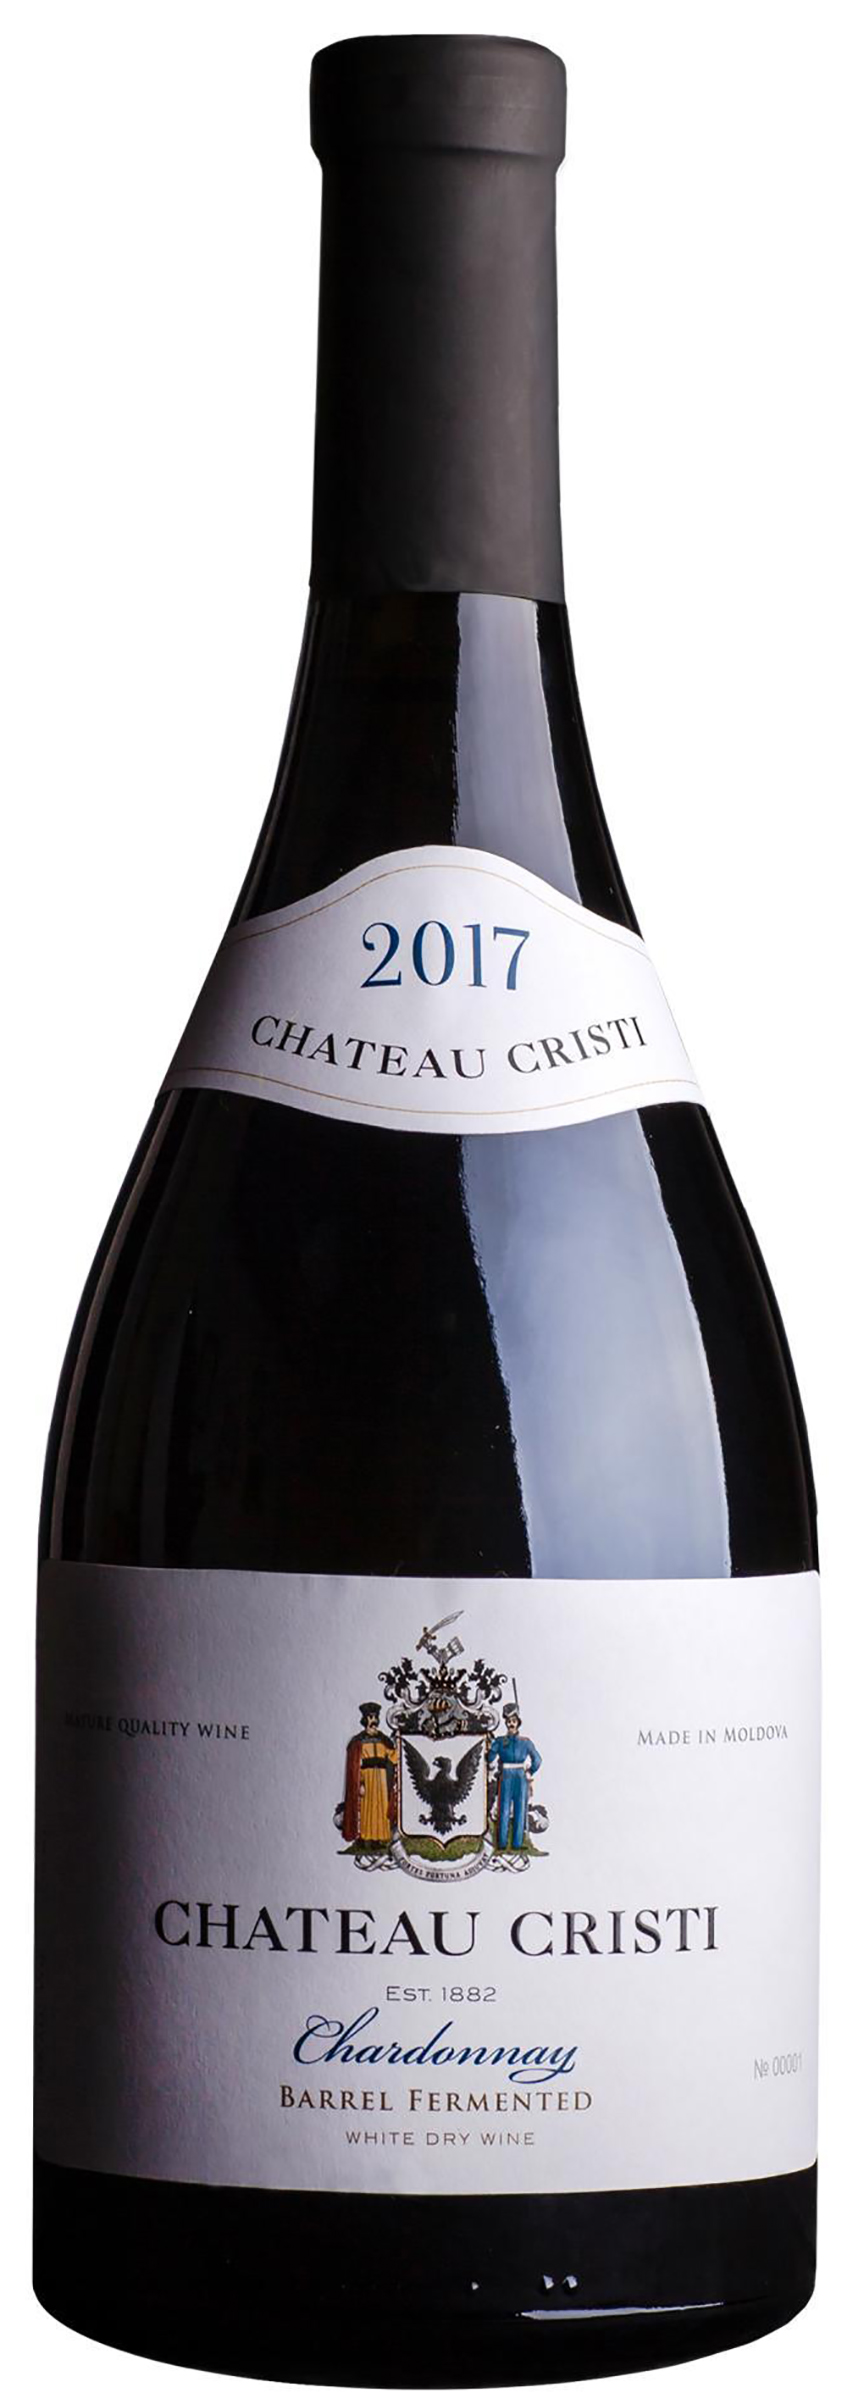 Vin alb - Chateau Cristi, Chardonnay, Barrel fermented, sec, 2018 | Chateau Cristi